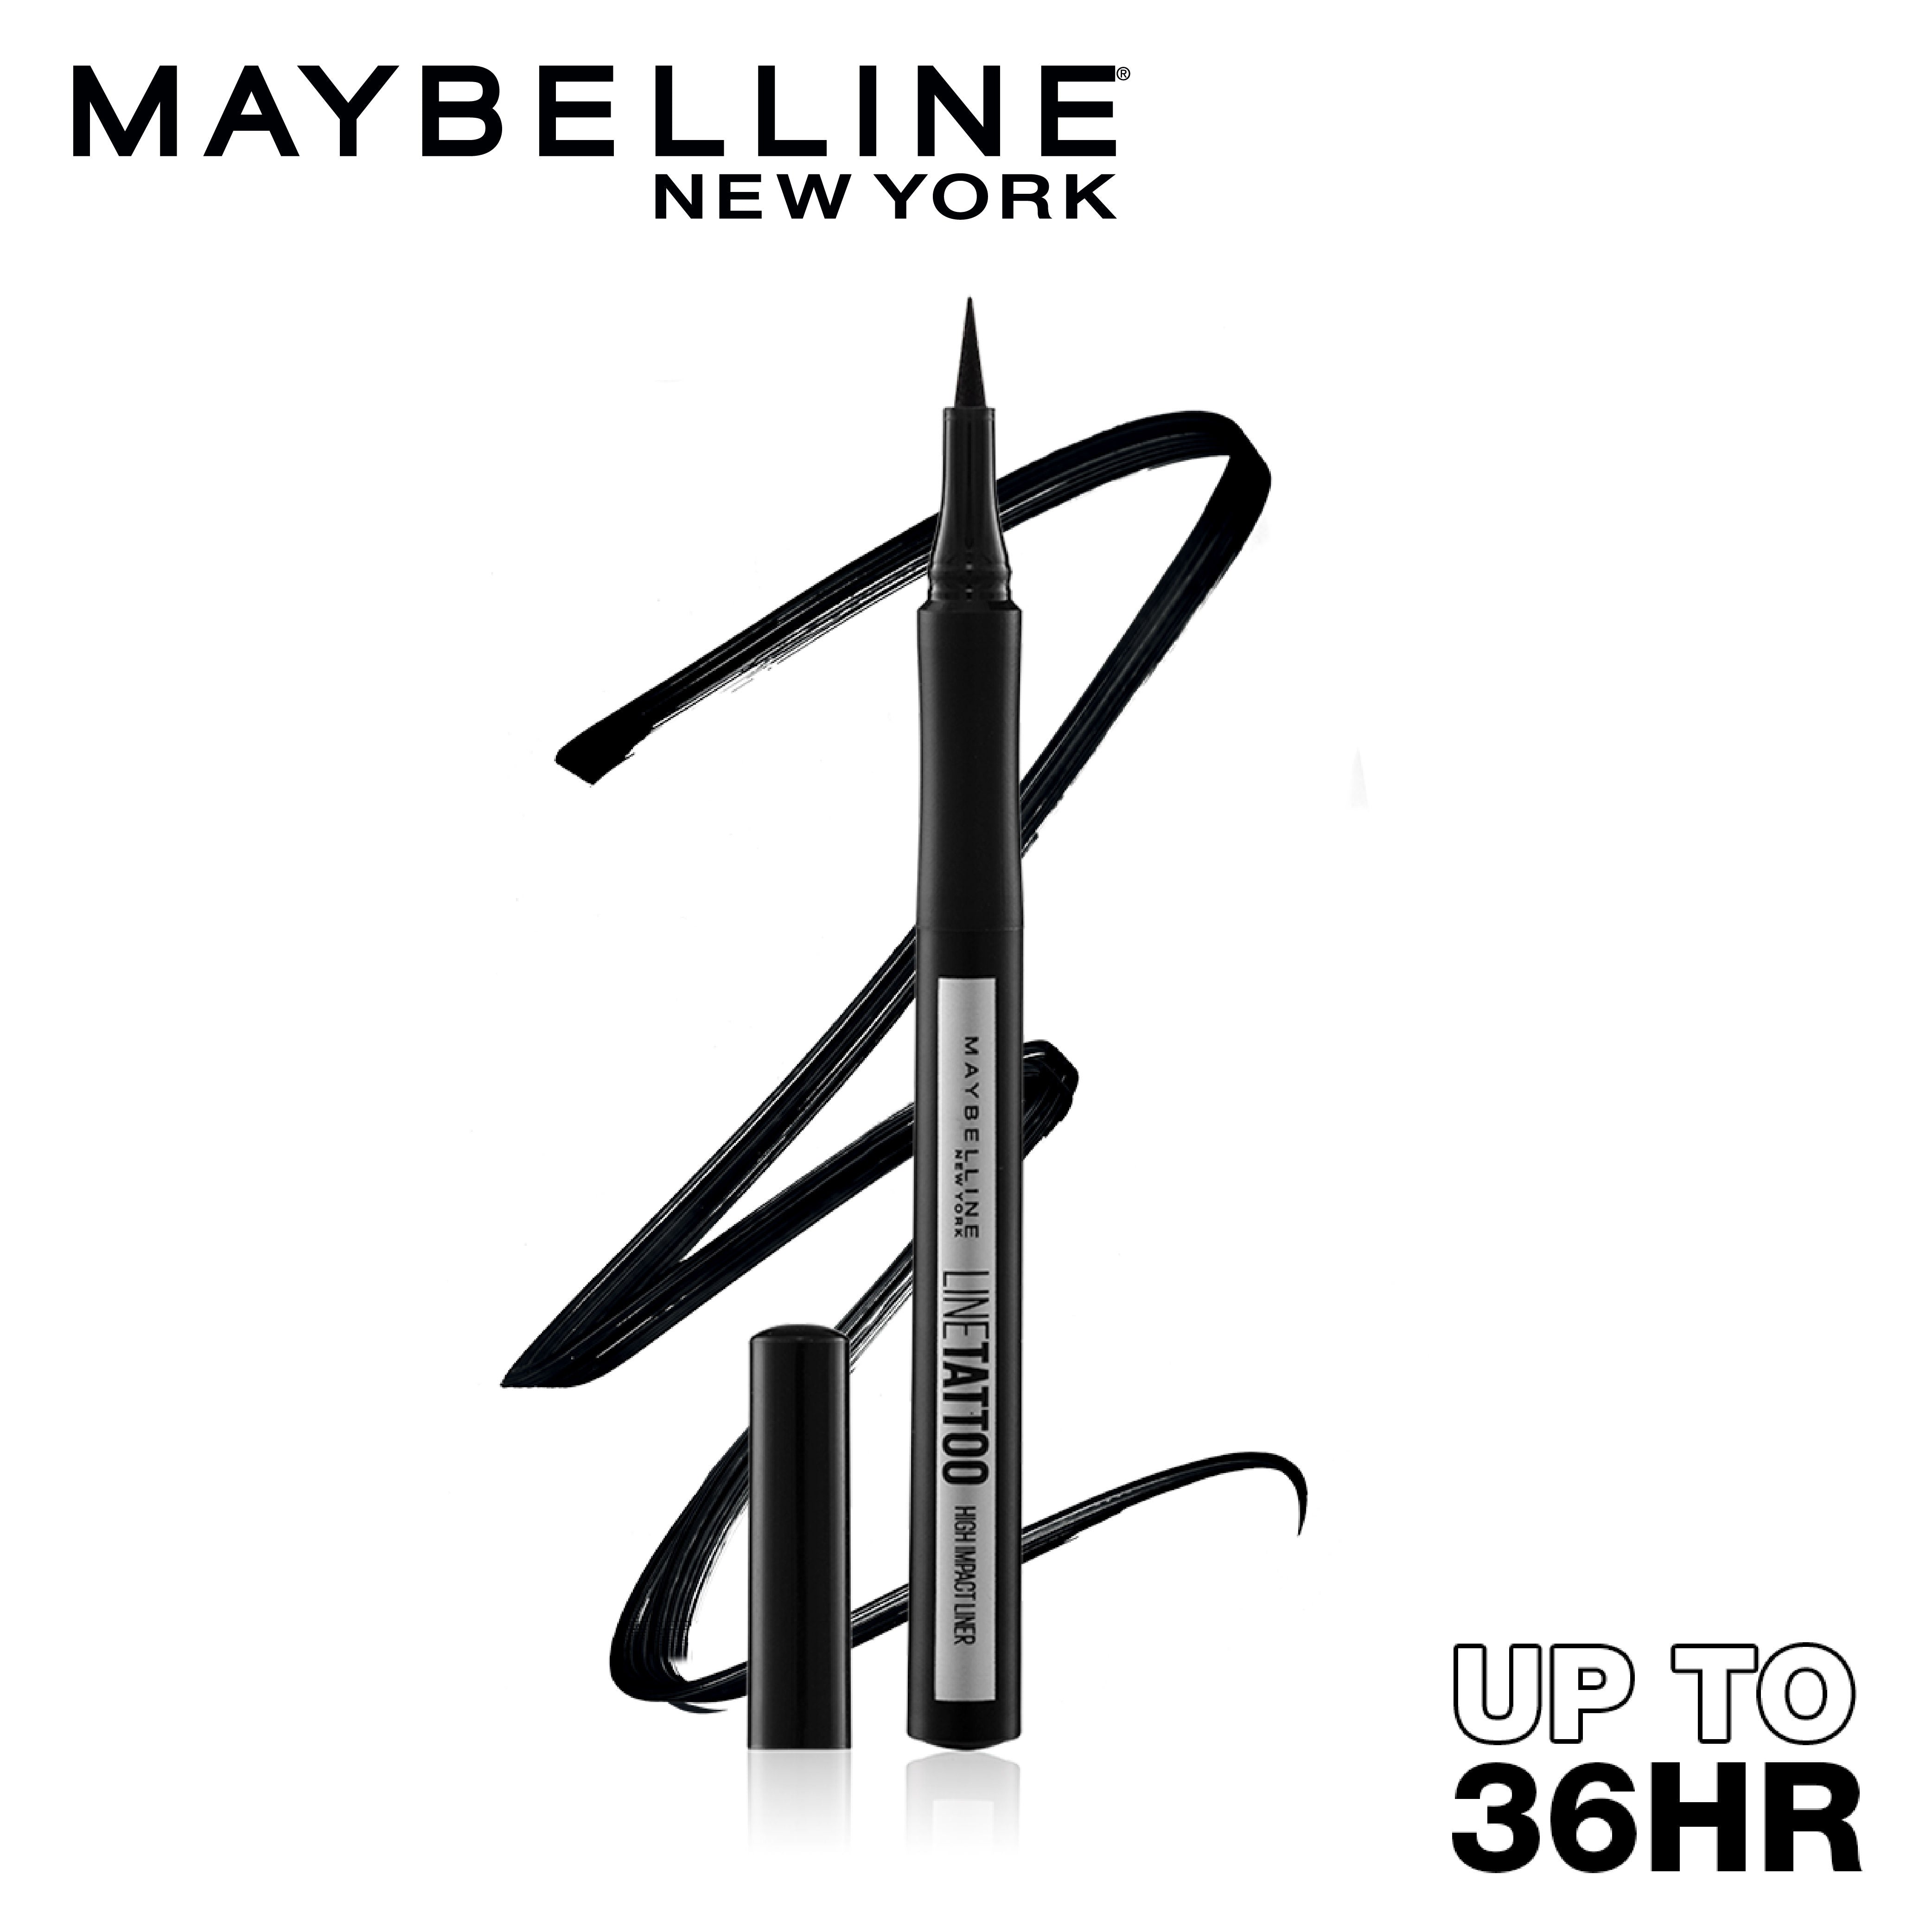 Maybelline New York Line Tattoo High Impact Liner Intense Black (1 g) Maybelline New York